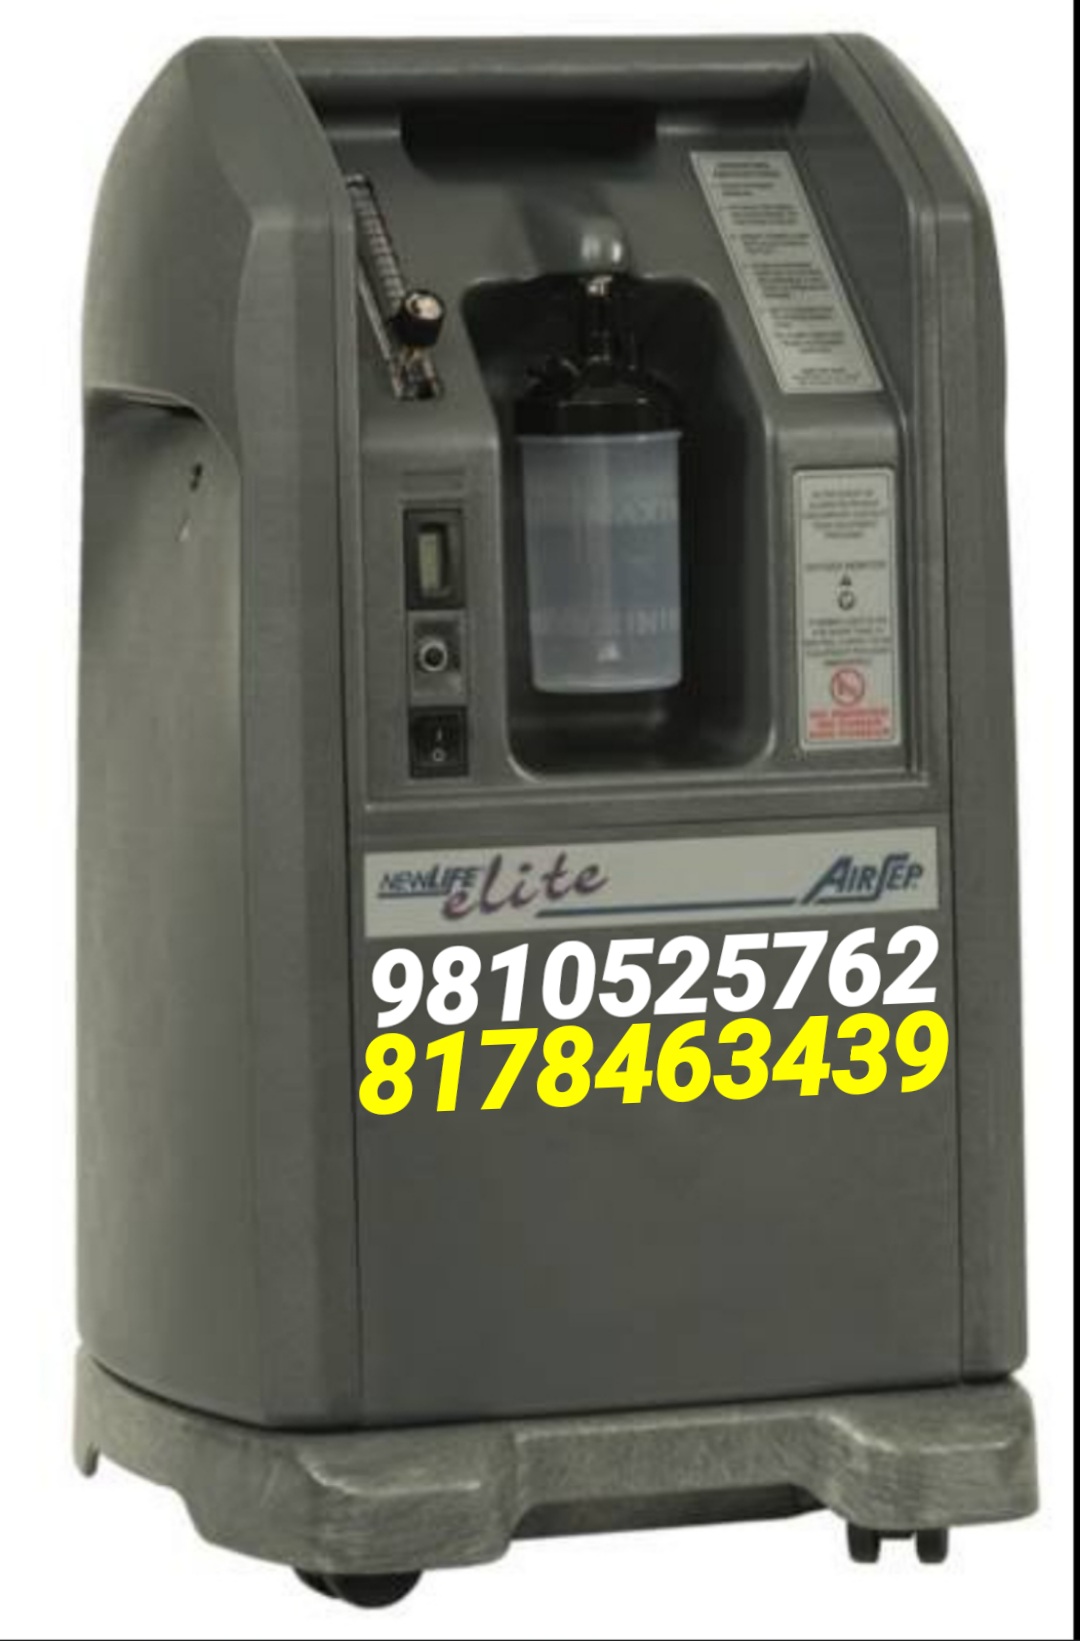 Airsep Oxygen Concentrator Machine Rental 8178463439